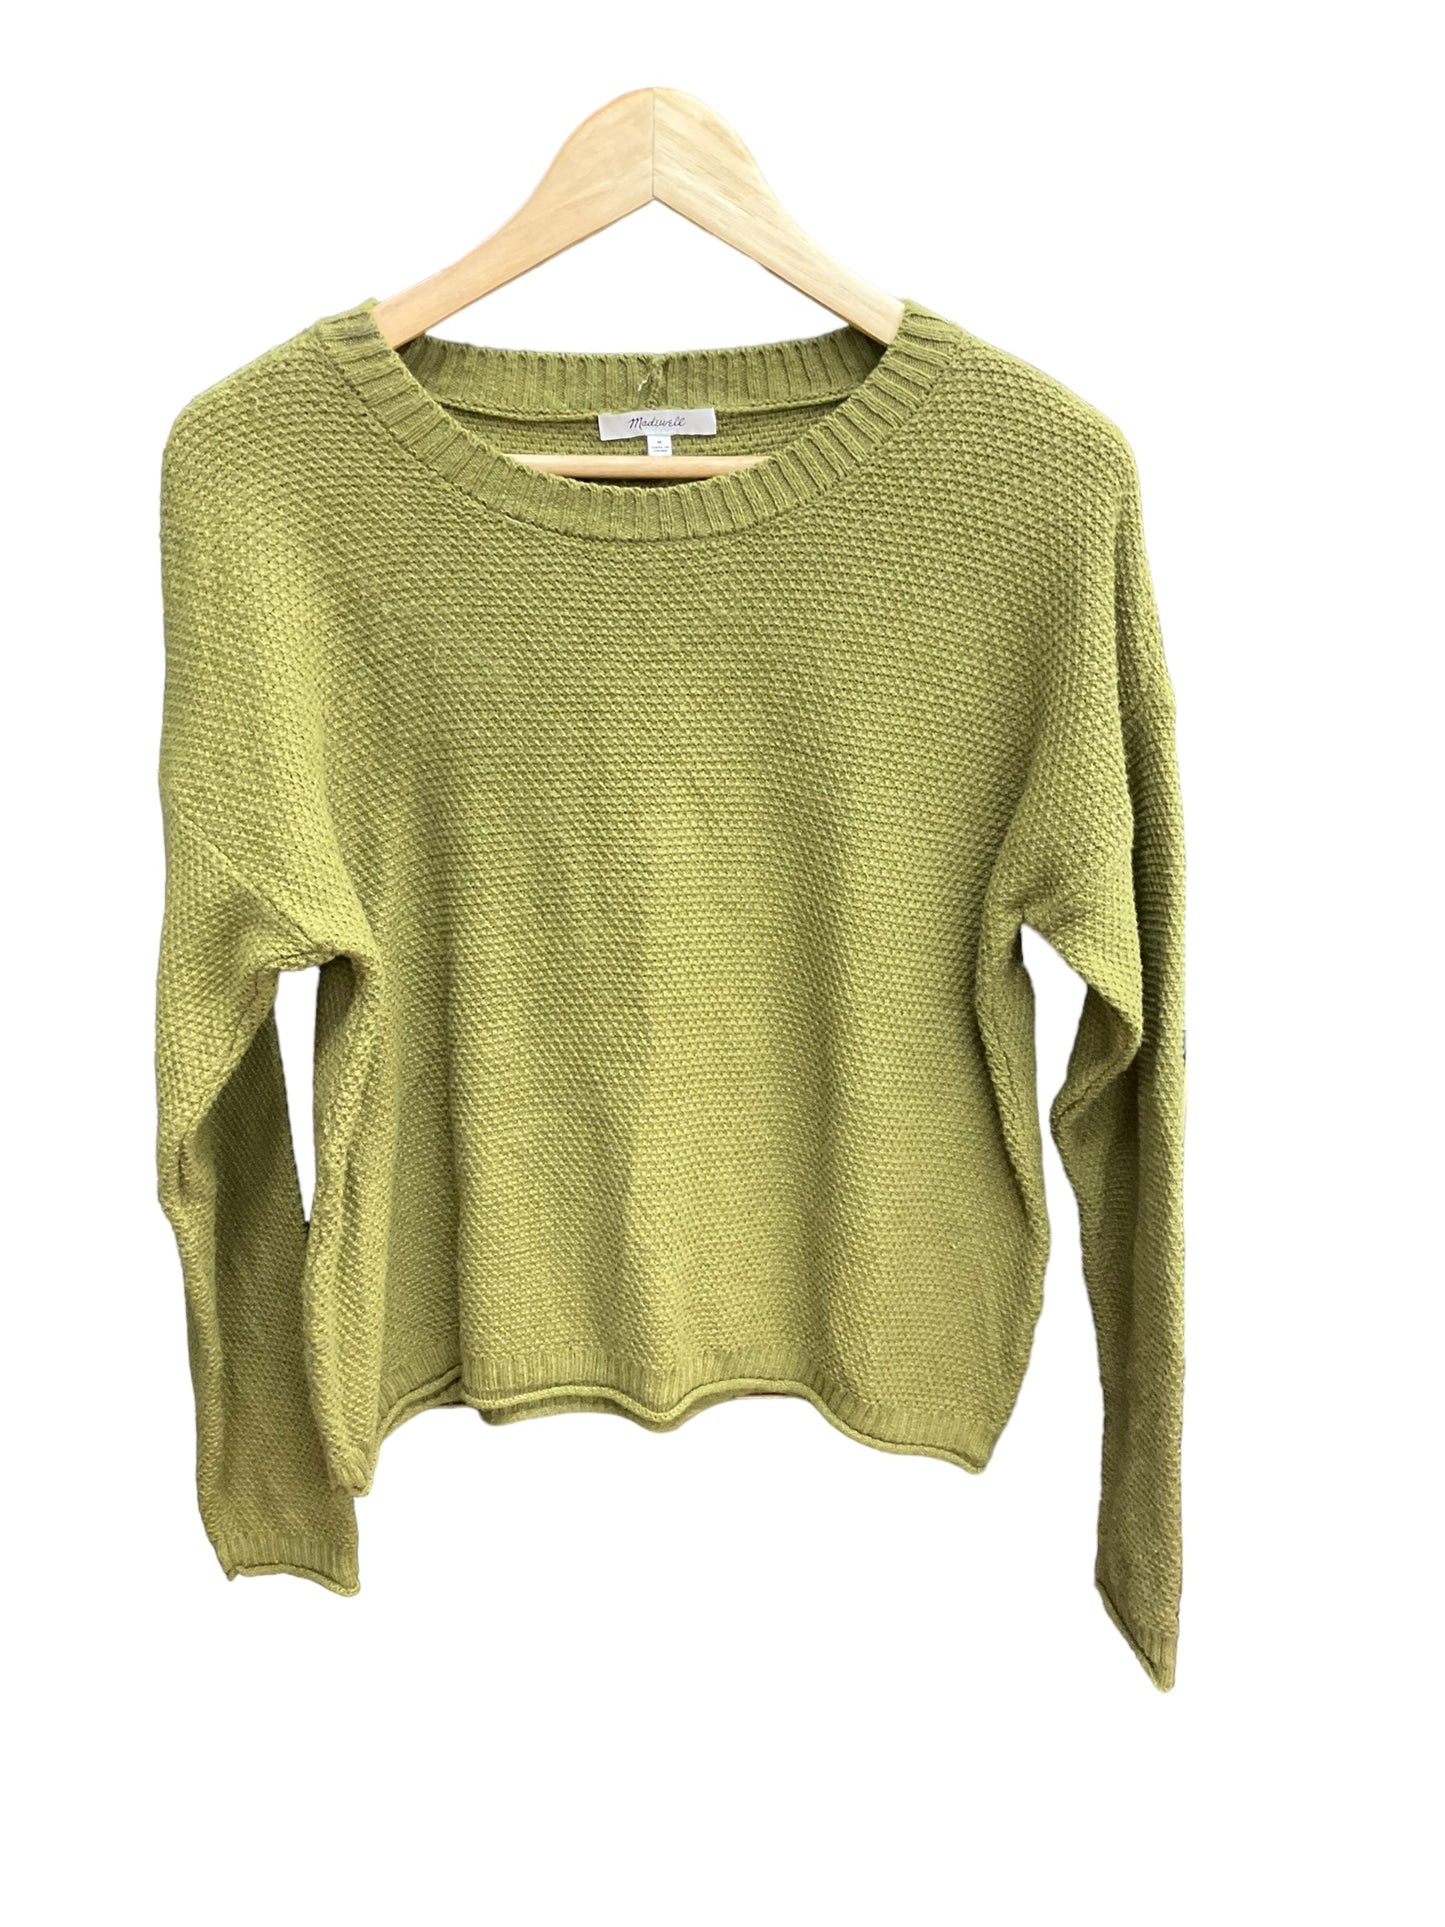 Green Sweater Sleeve Madewell, Size M